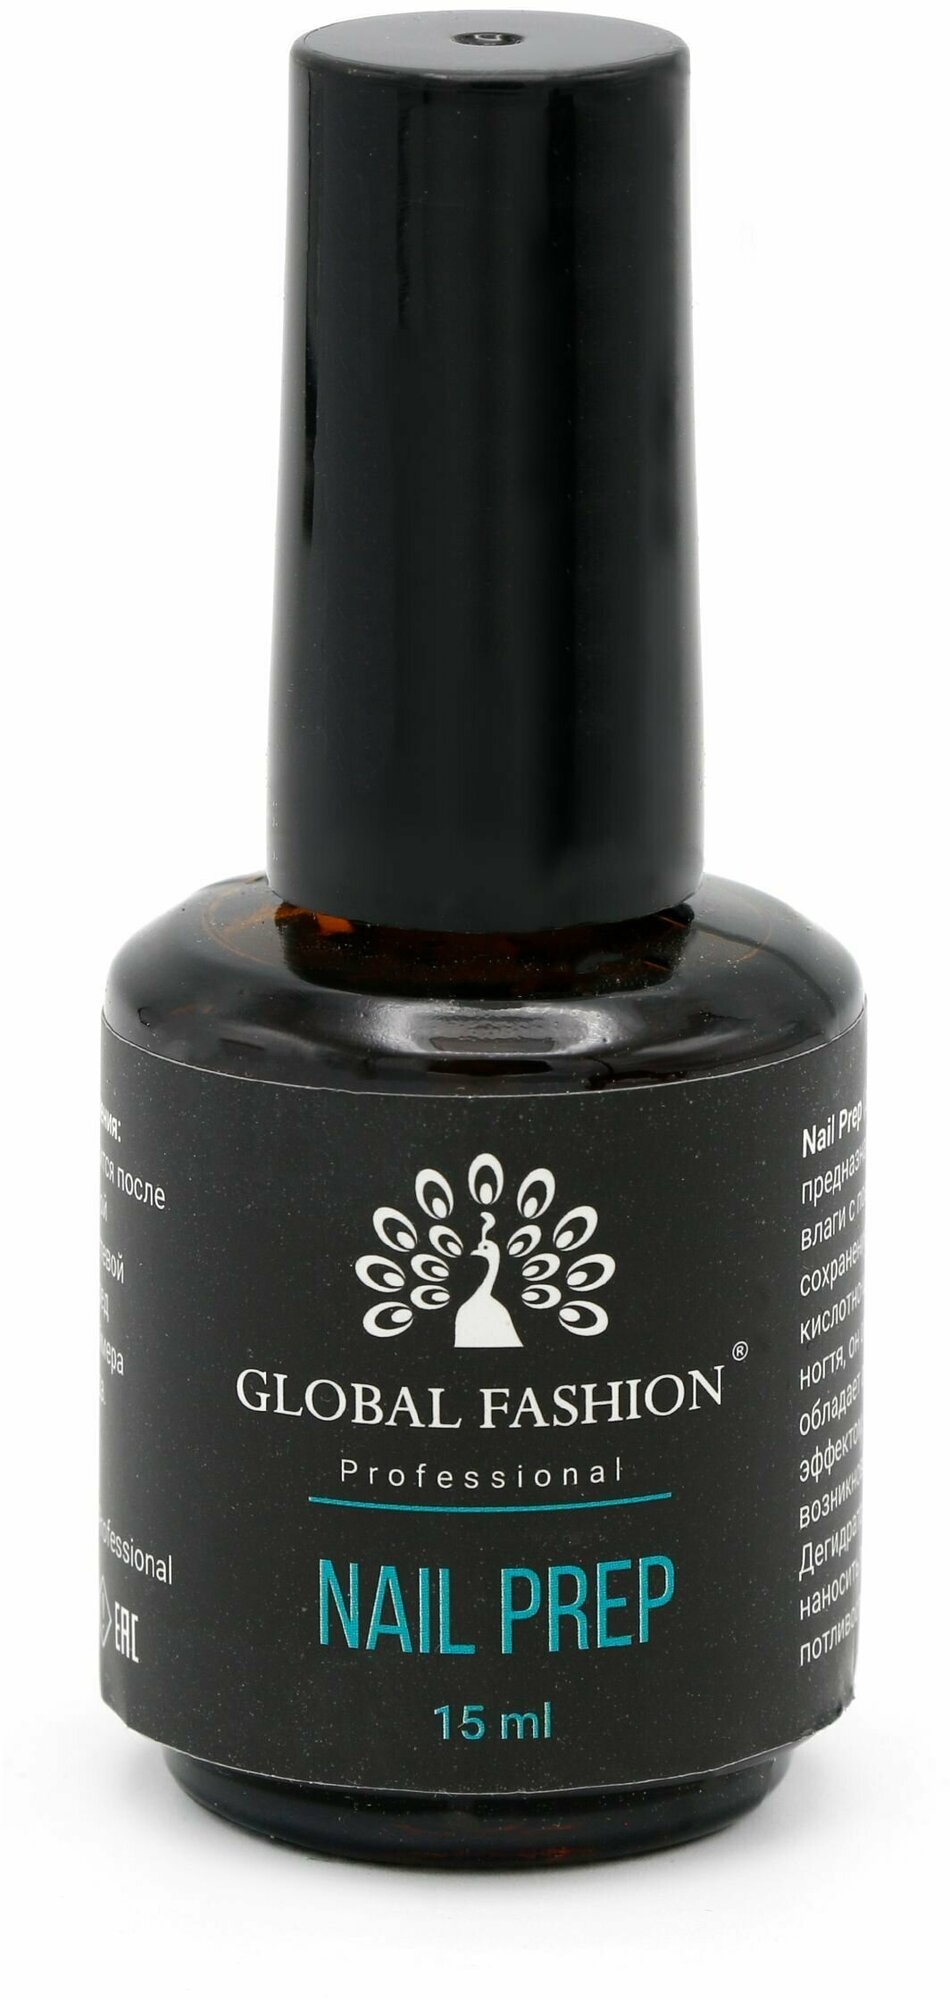 Global Fashion Nail Prep 3 в 1 обезжириватель, дегидратор, антисептик для ногтей, гель-лака / 15 мл